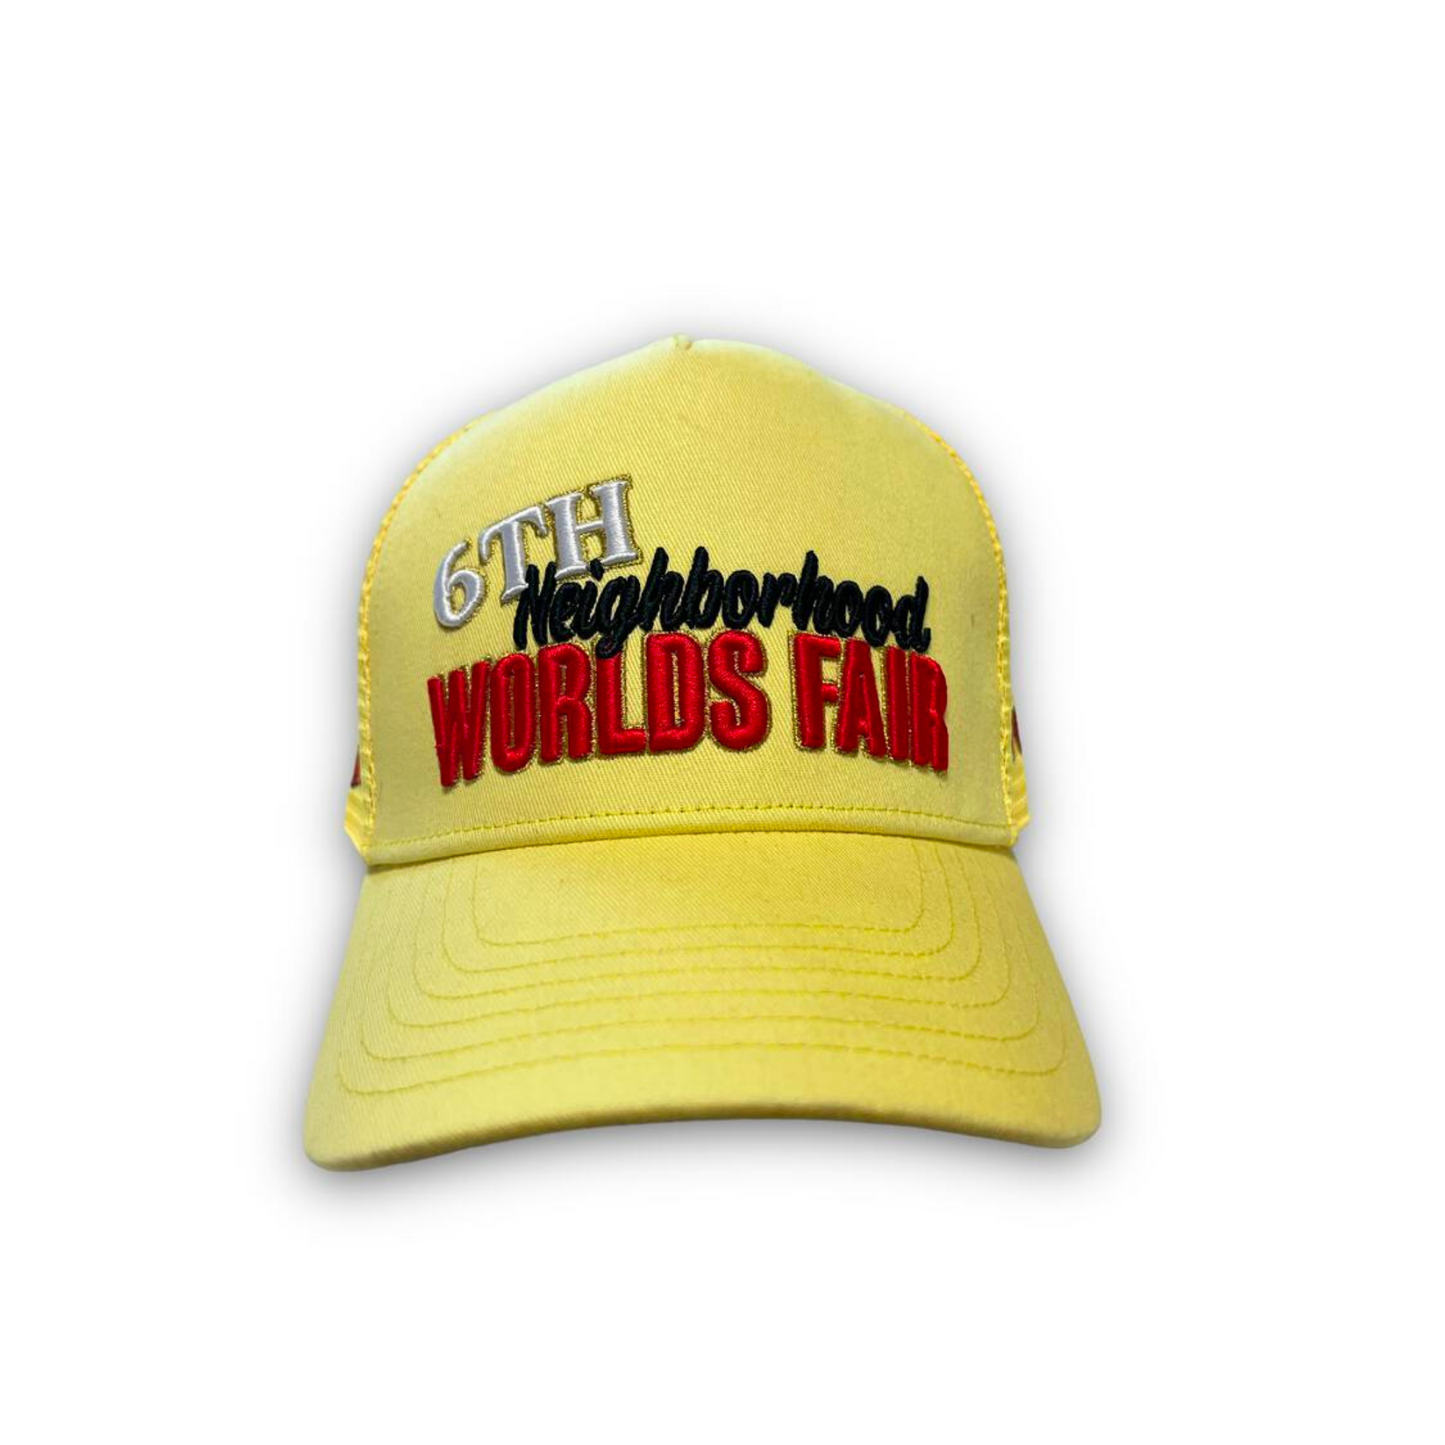 6TH NBRHD "Worlds Fair" Hat  - Yellow